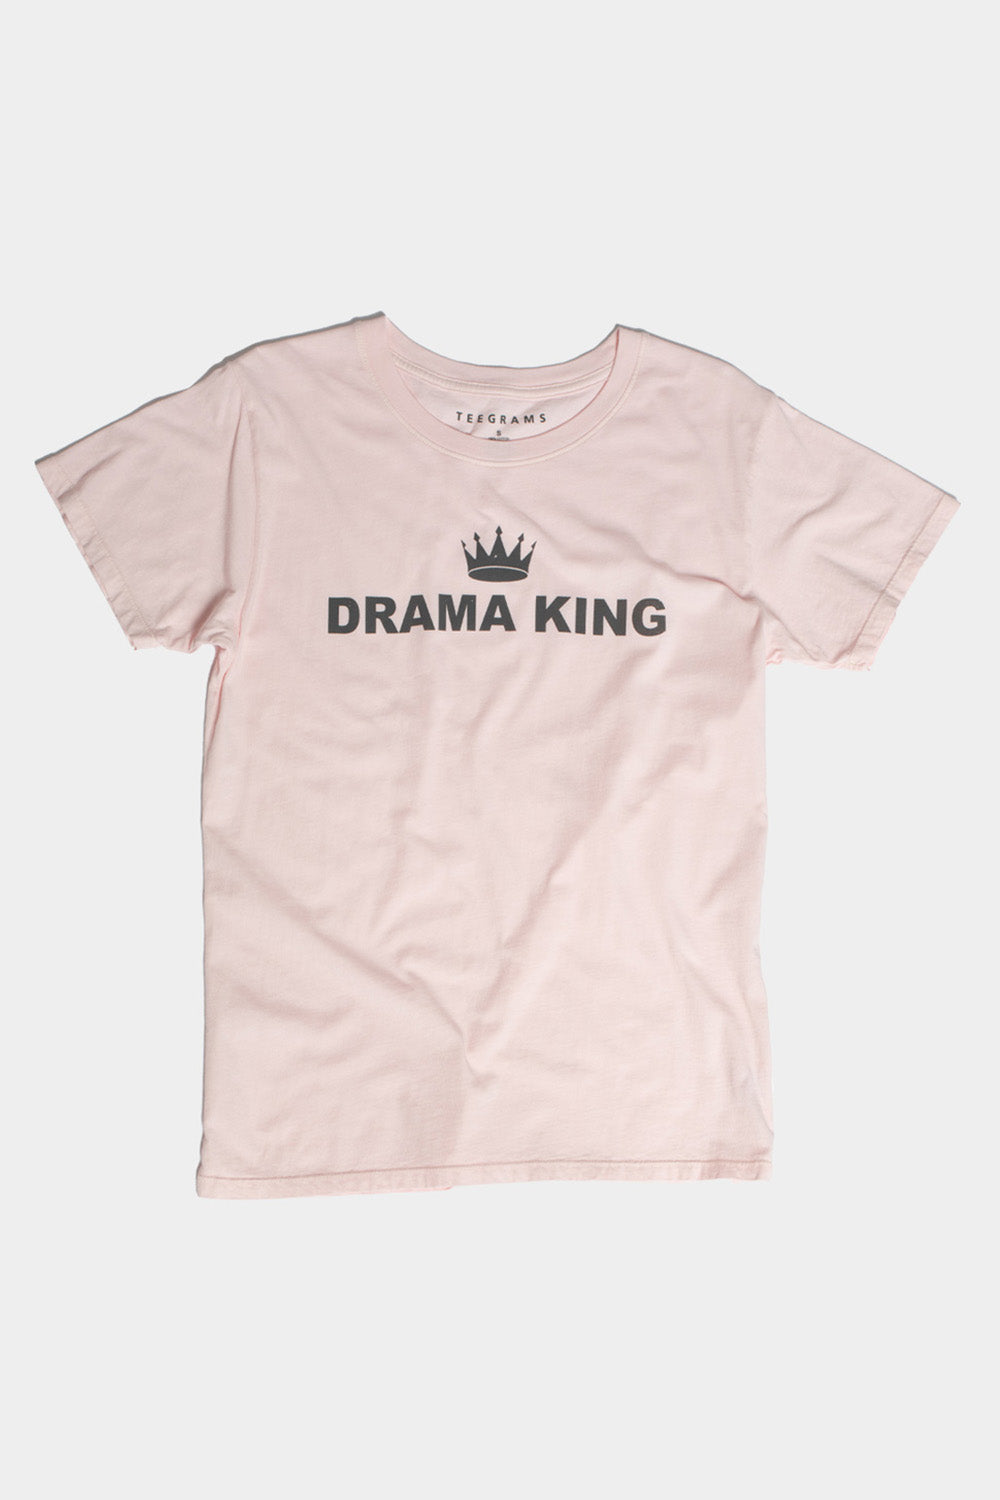 Drama King Unisex Tee